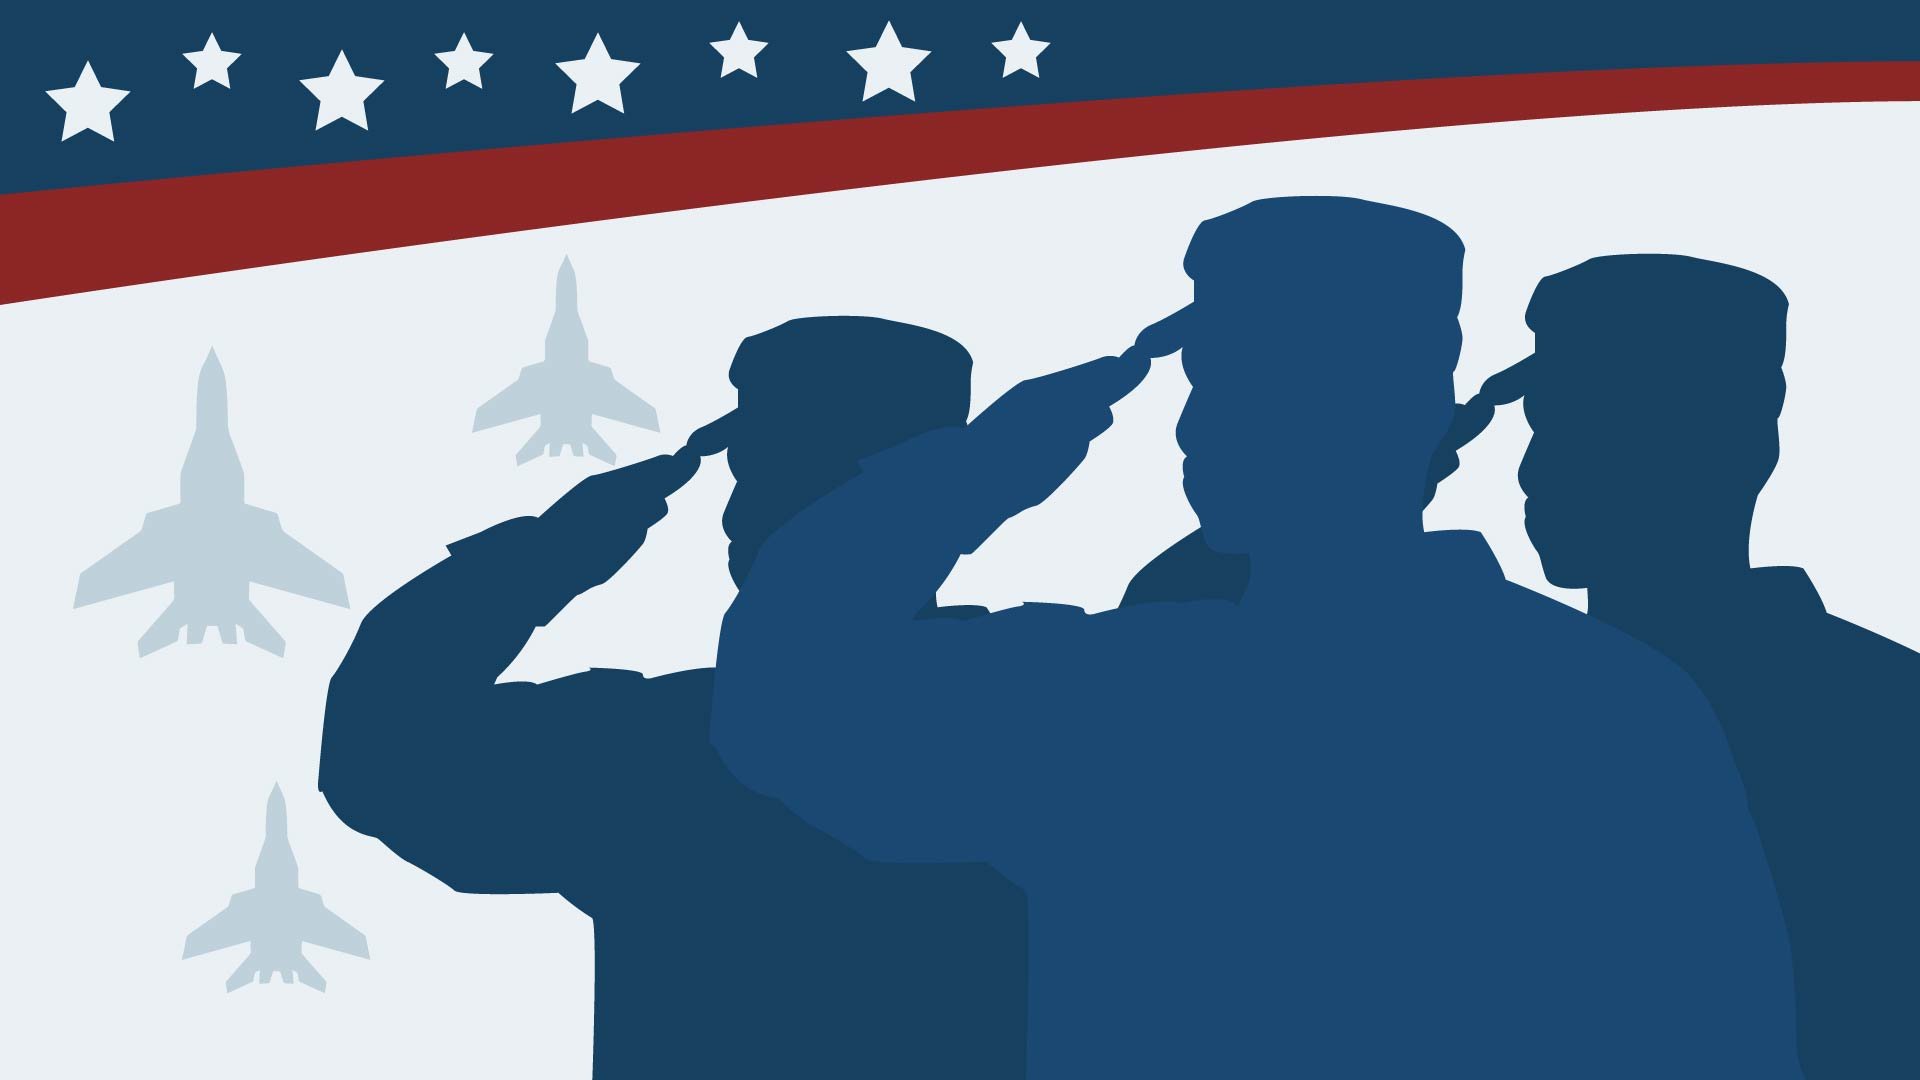 Armed Forces Day Wallpaper Background in PDF, Illustrator, PSD, EPS, SVG, JPG, PNG